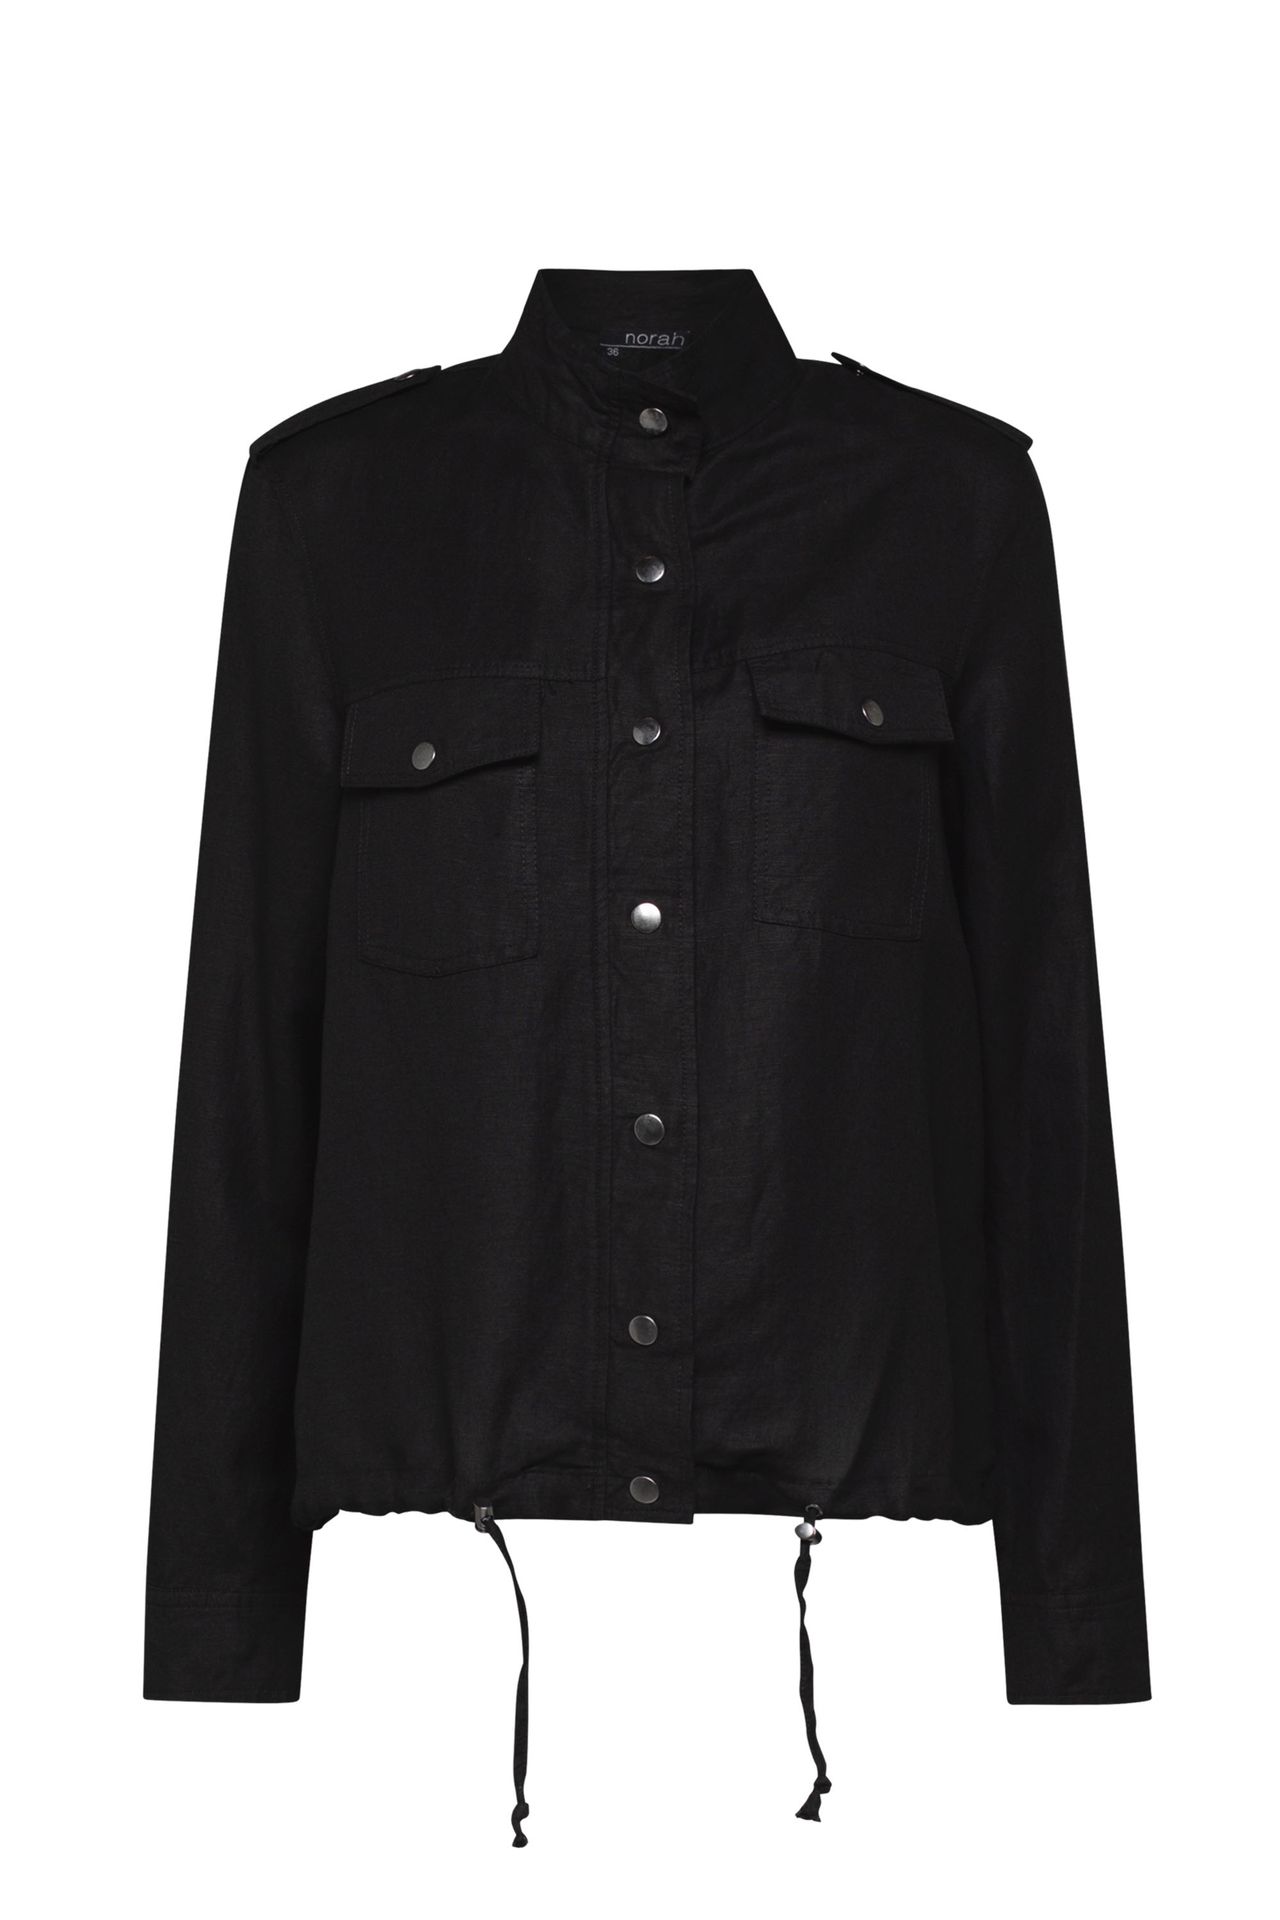 Norah Zwarte jacket black 211085-001